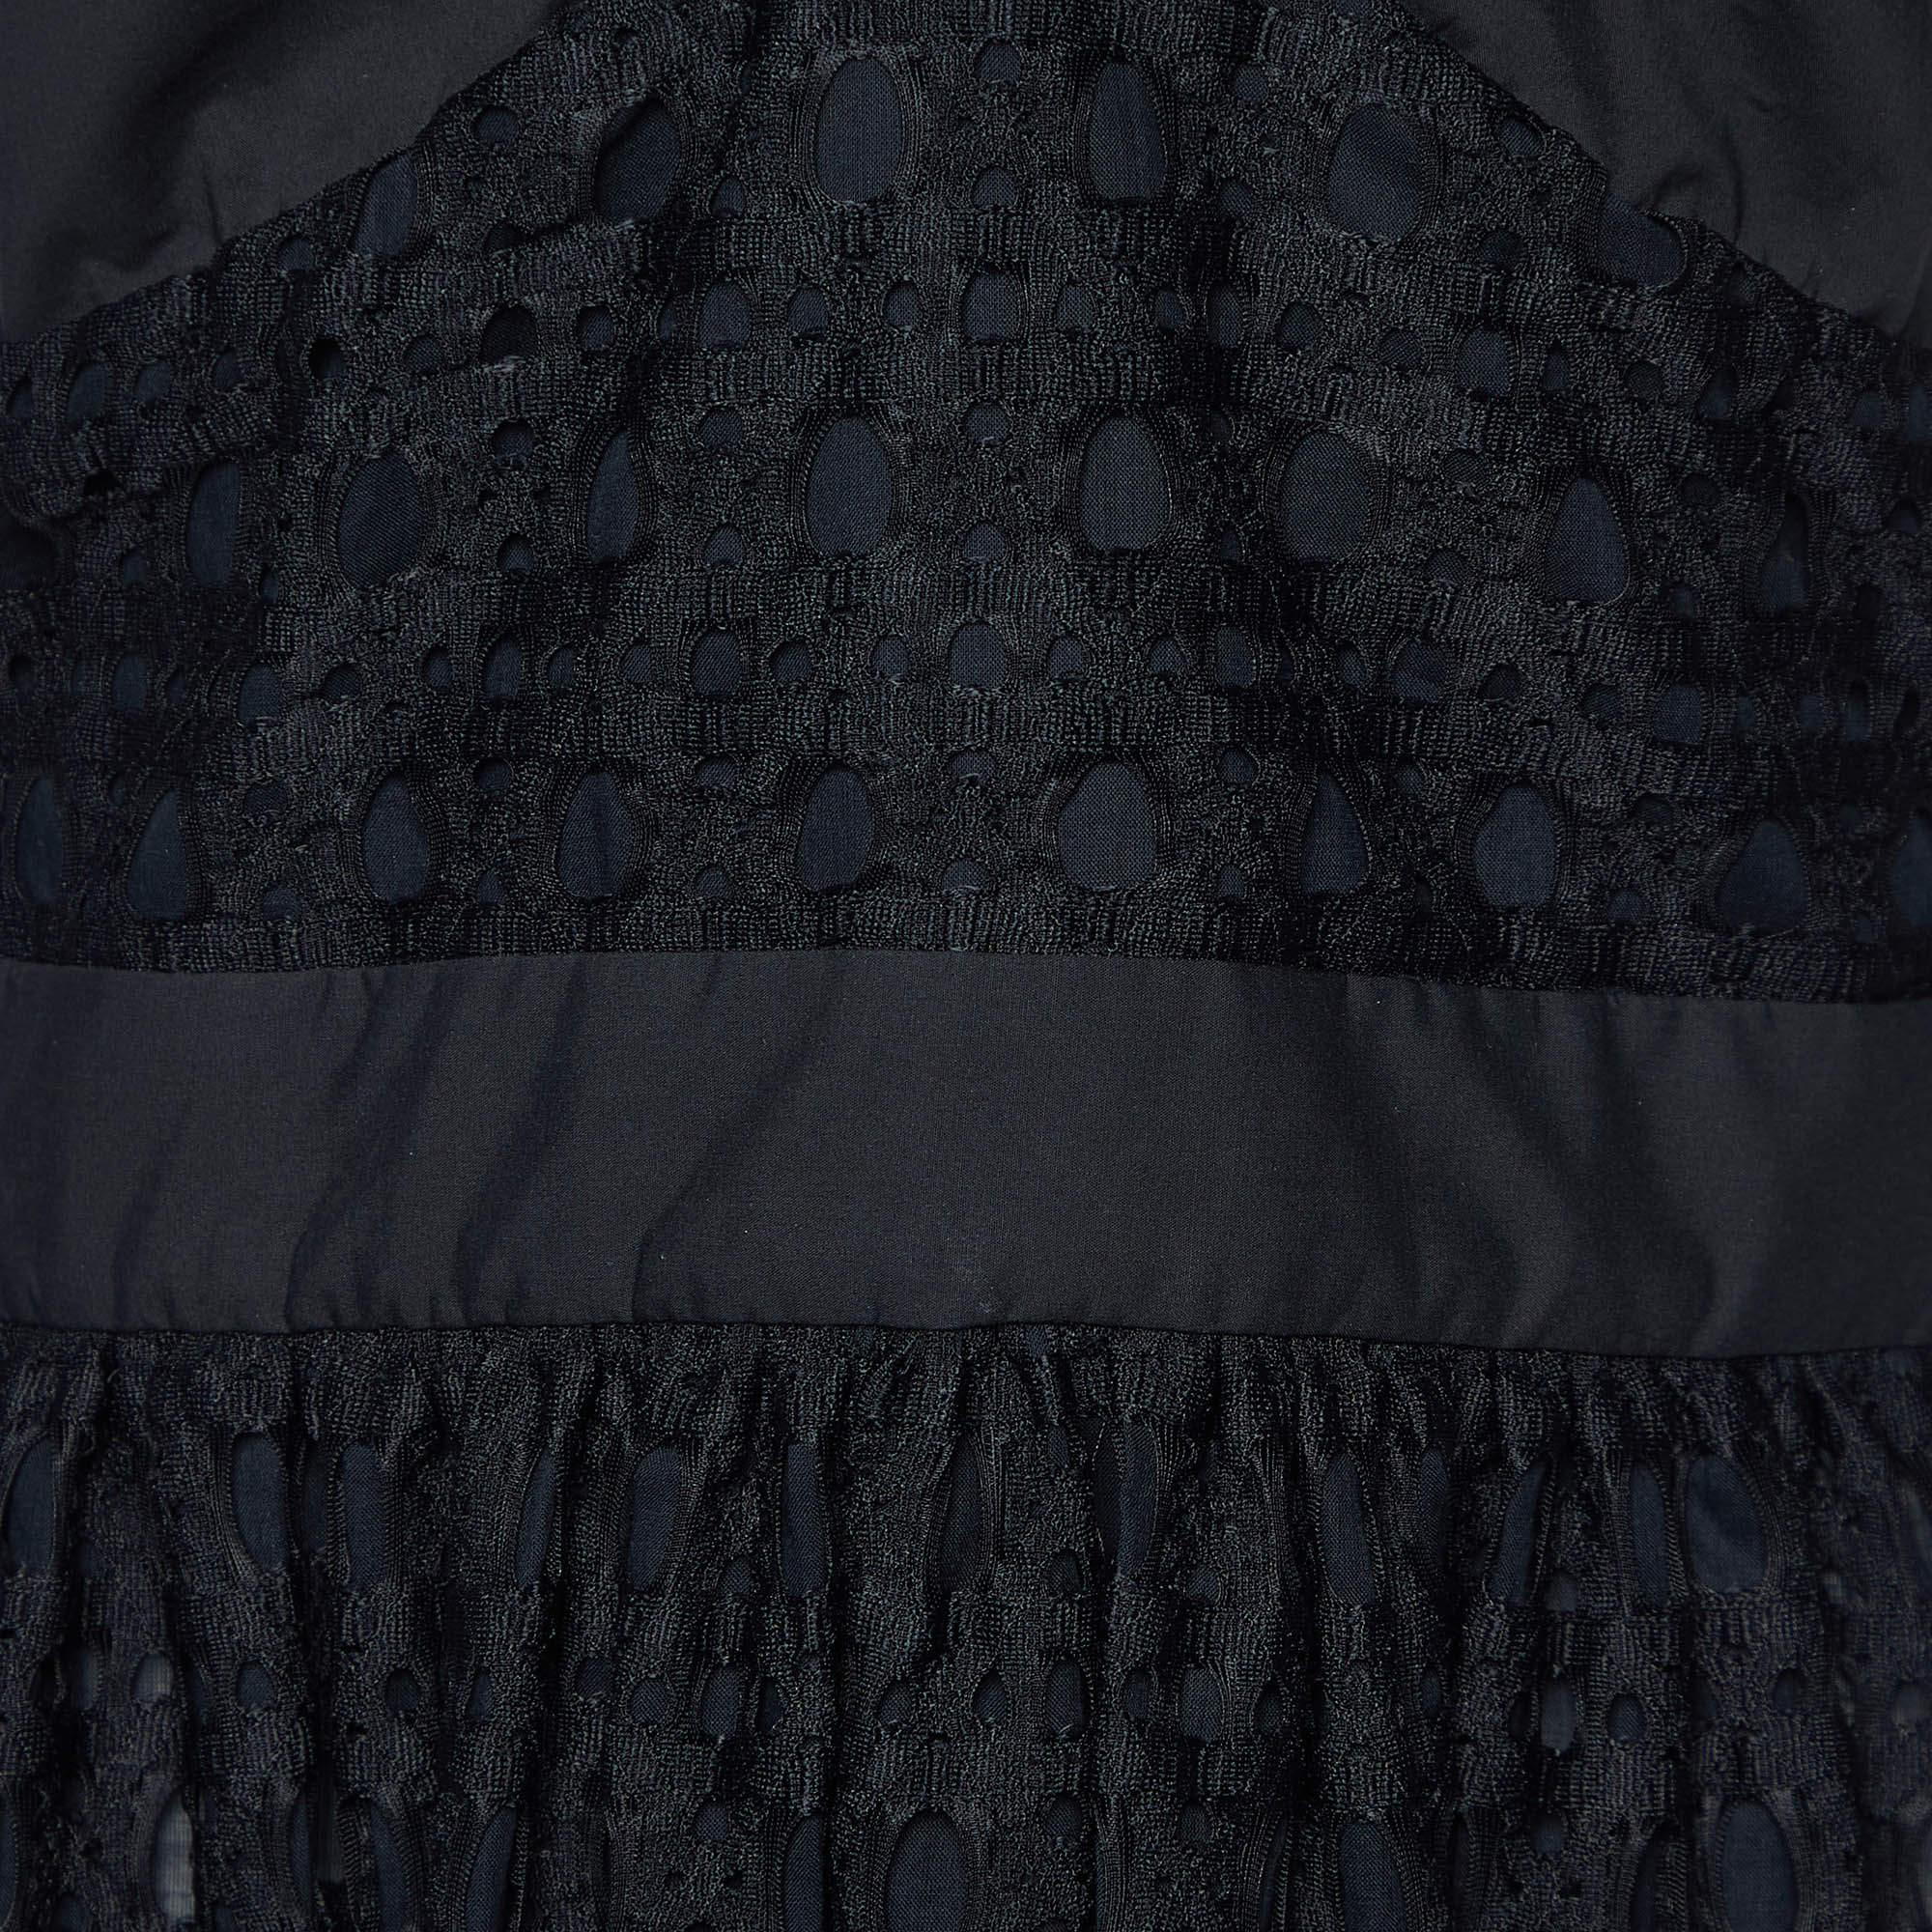 Boutique Moschino Black Lace Gathered Neck Dress M In Excellent Condition For Sale In Dubai, Al Qouz 2